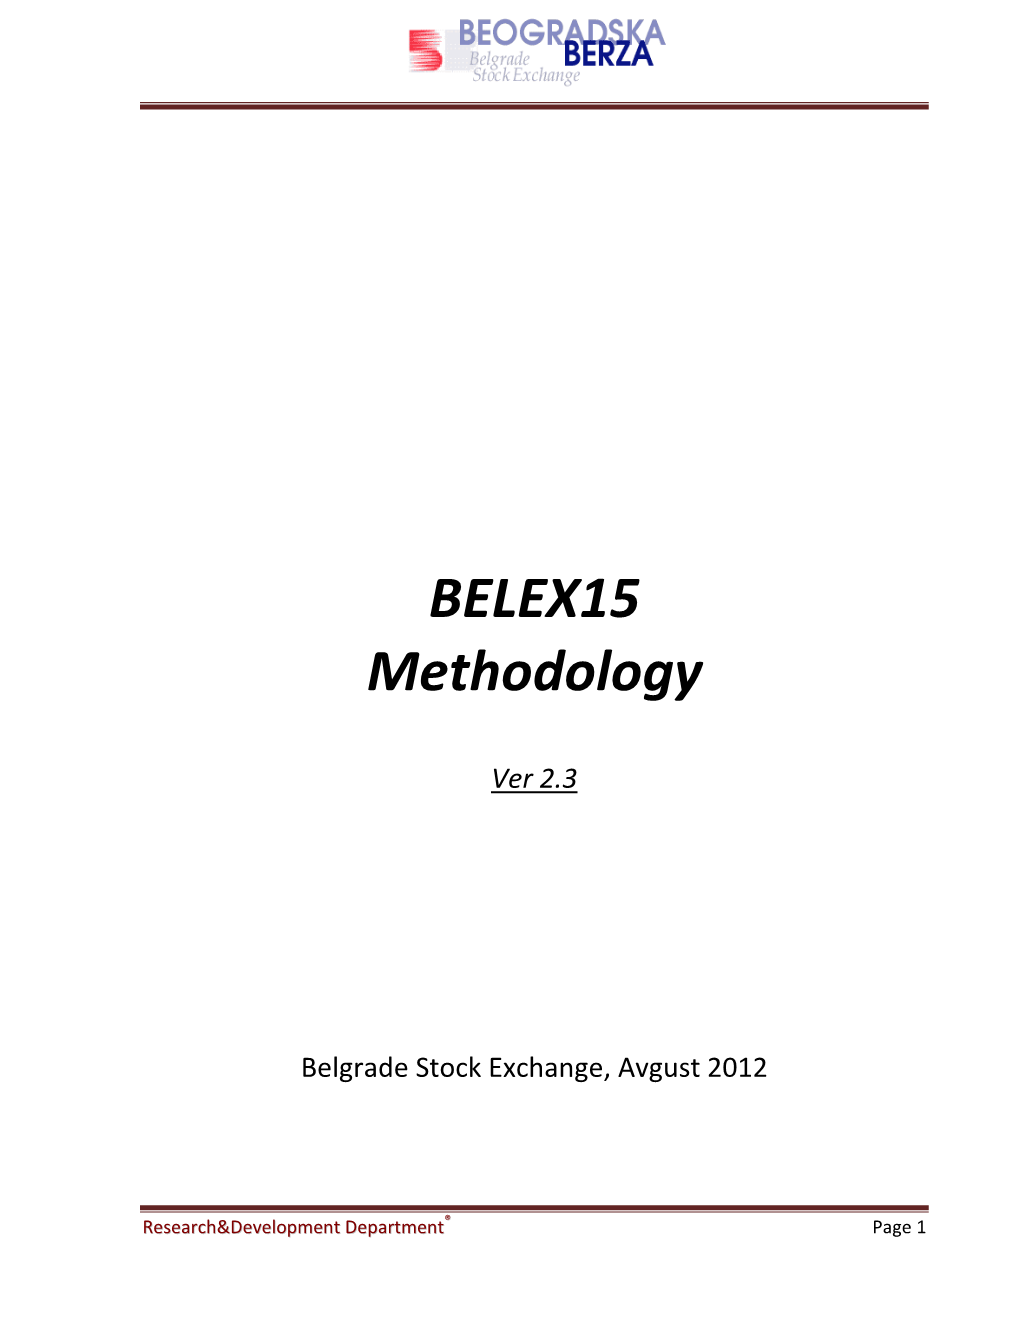 BELEX15 Methodology